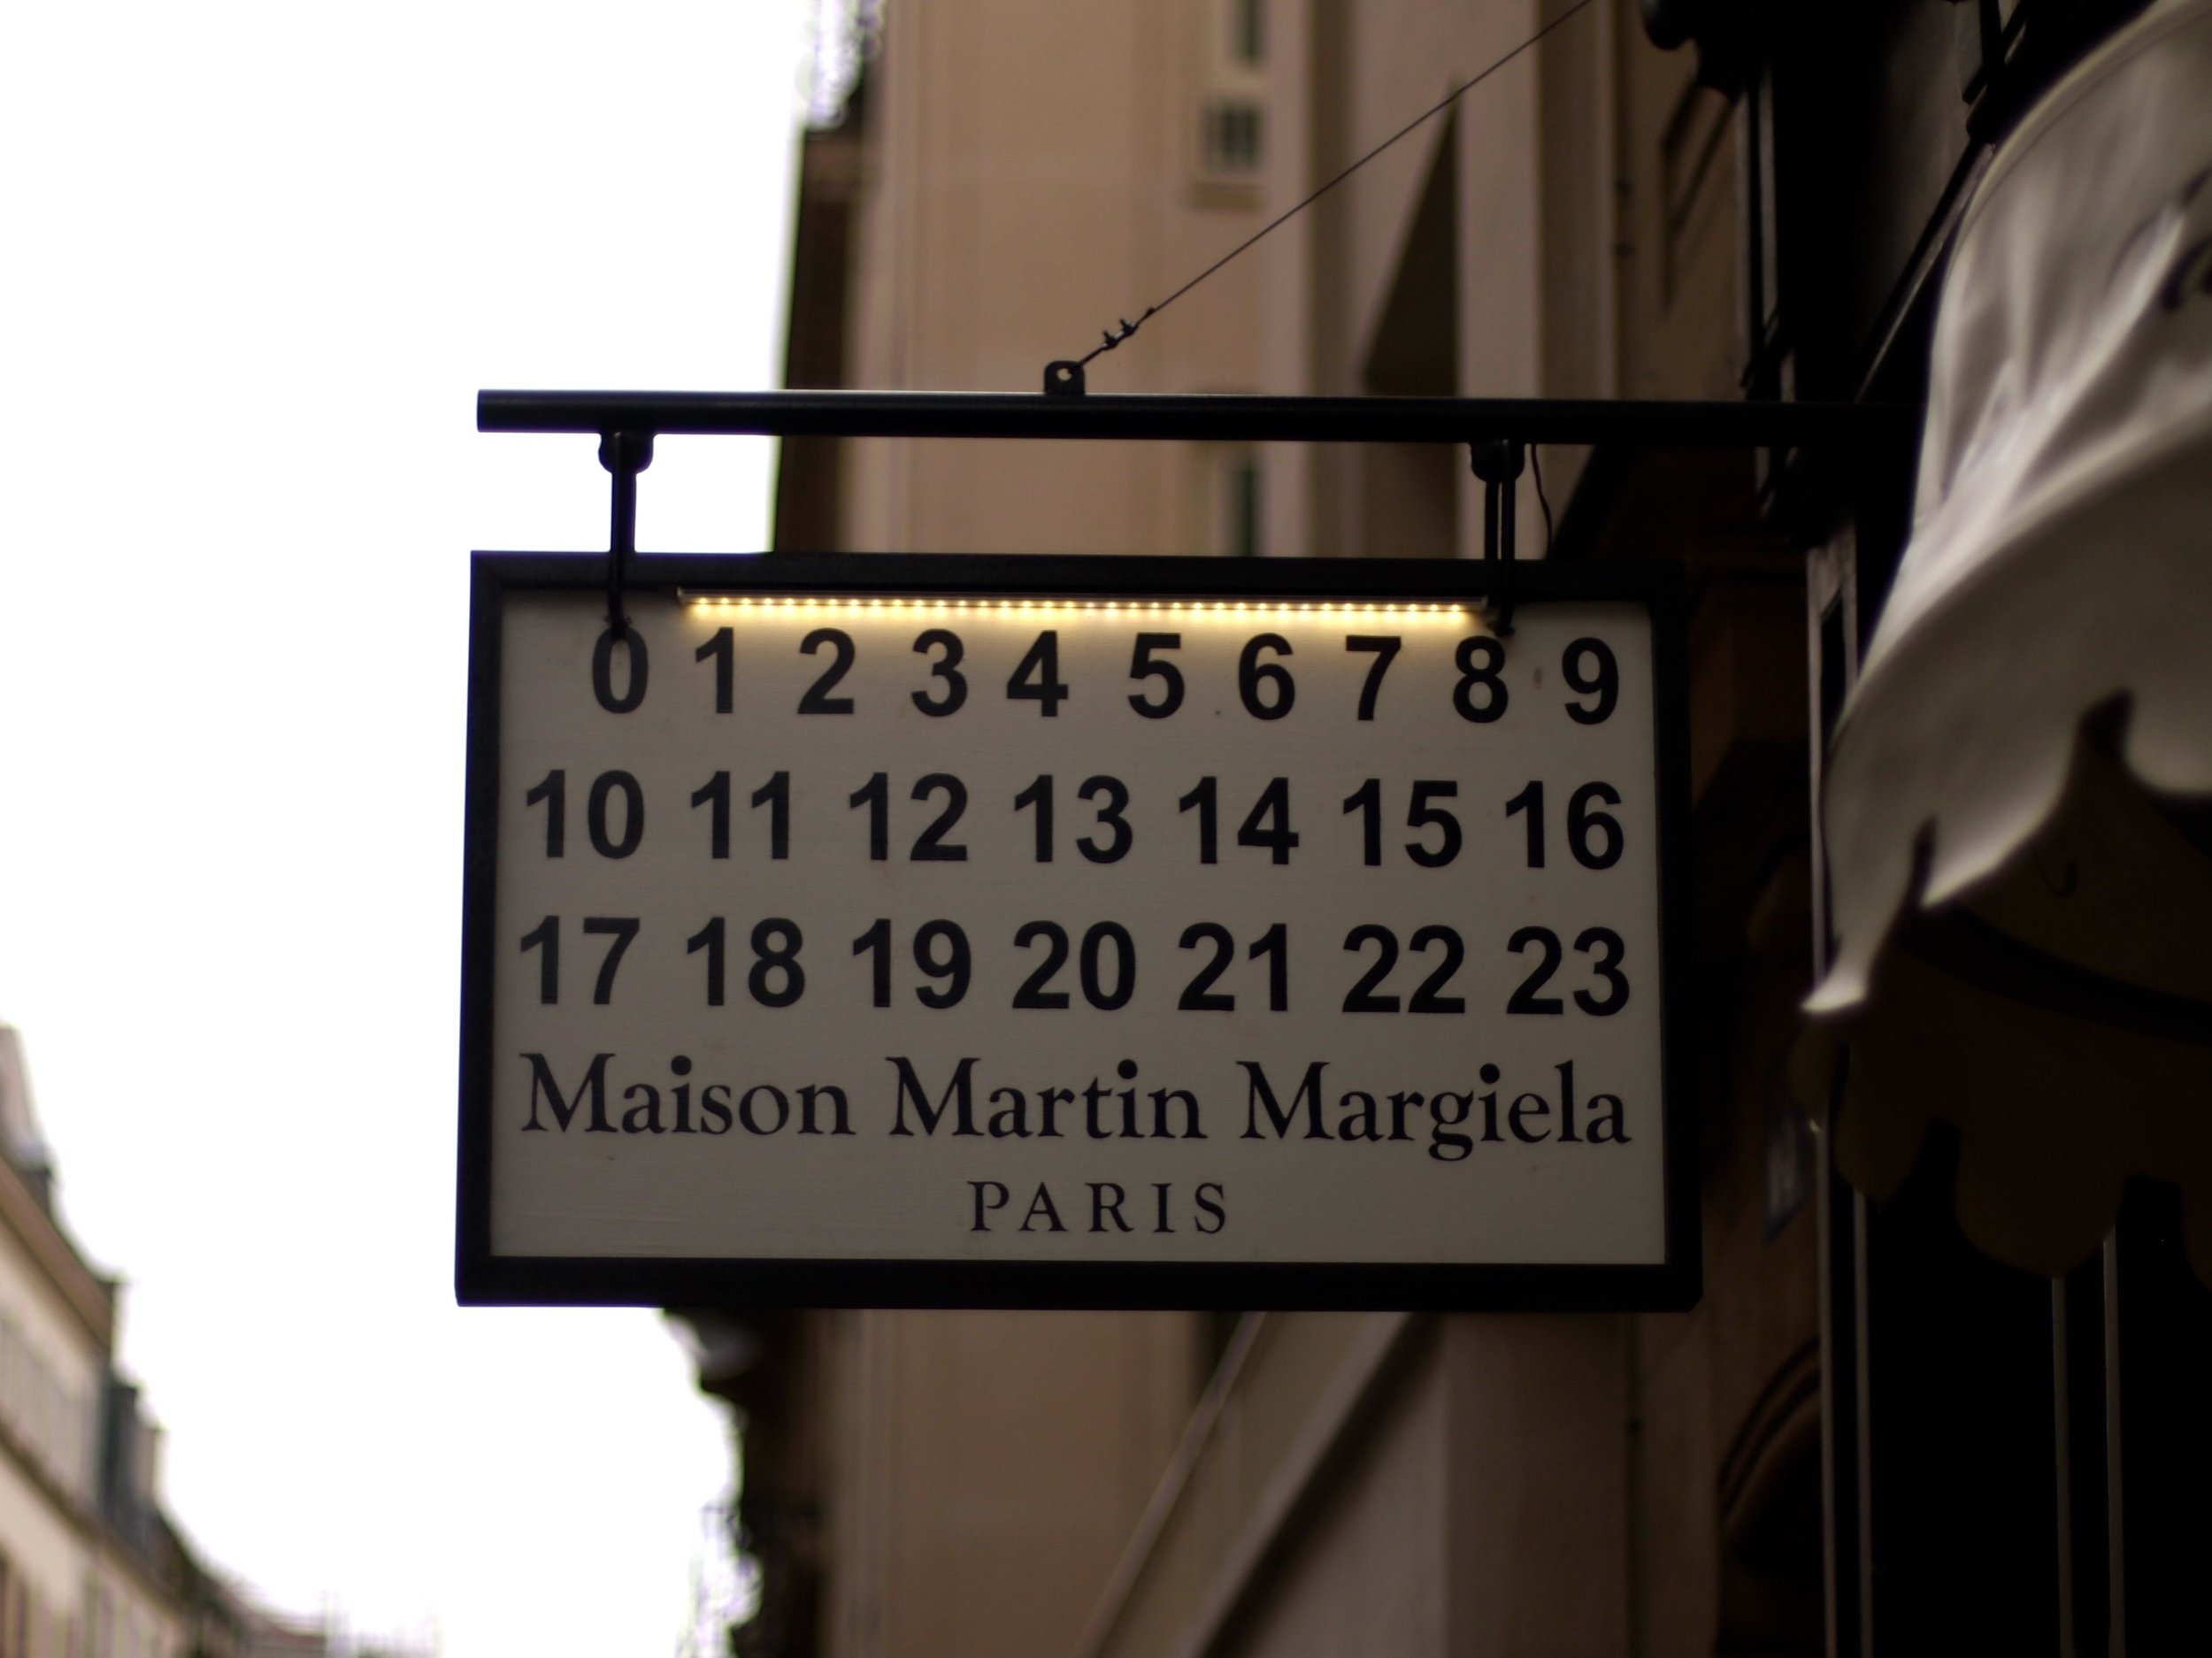 Maison Martin Margiela PARIS